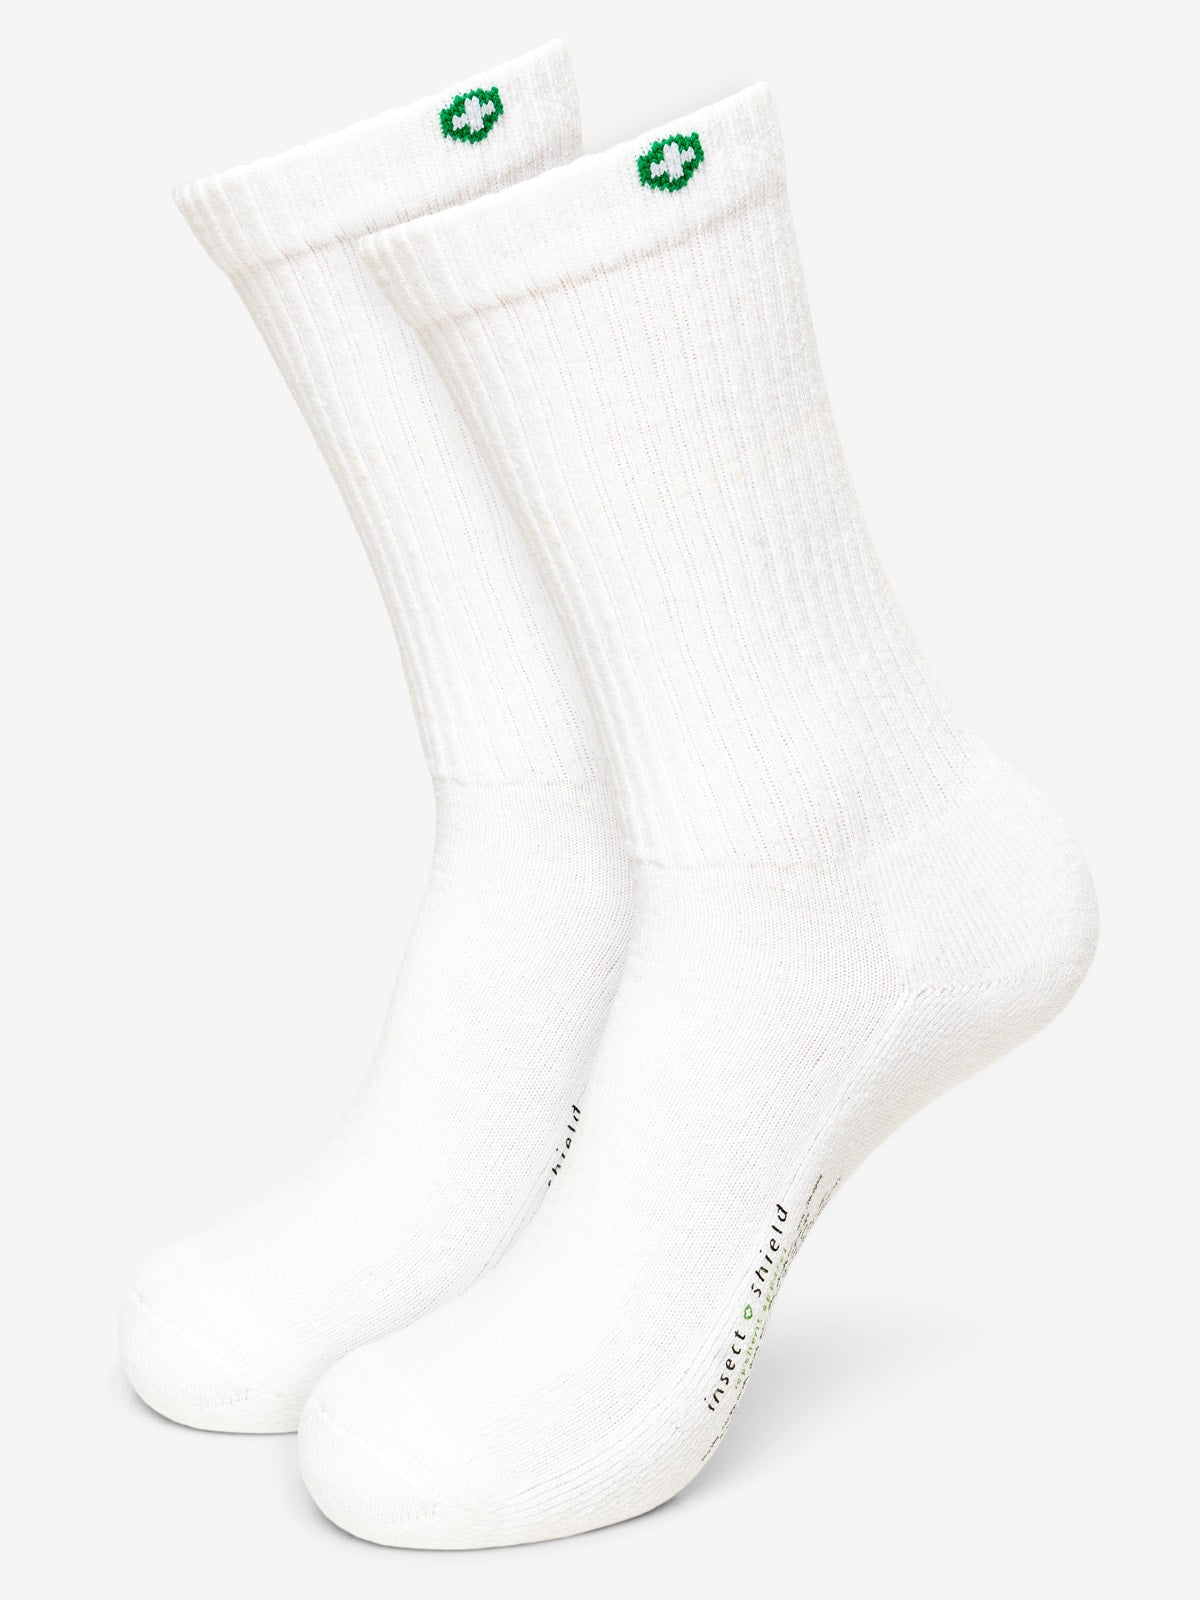 Insect Shield Crew Socks  Best-Selling Repellent Socks